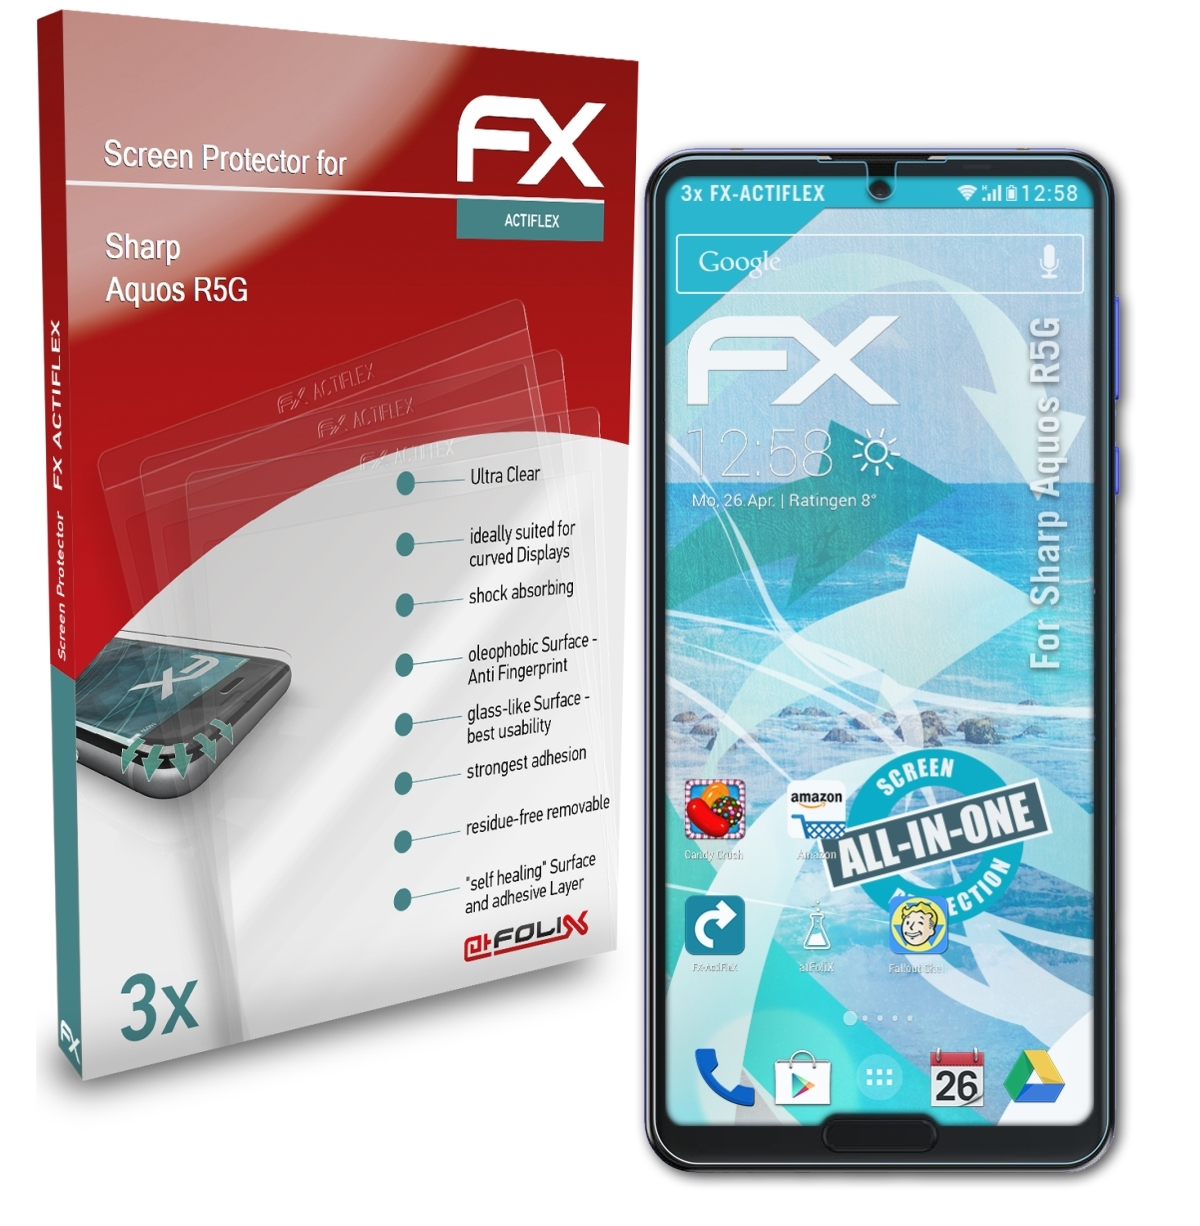 3x R5G) Aquos FX-ActiFleX Displayschutz(für Sharp ATFOLIX